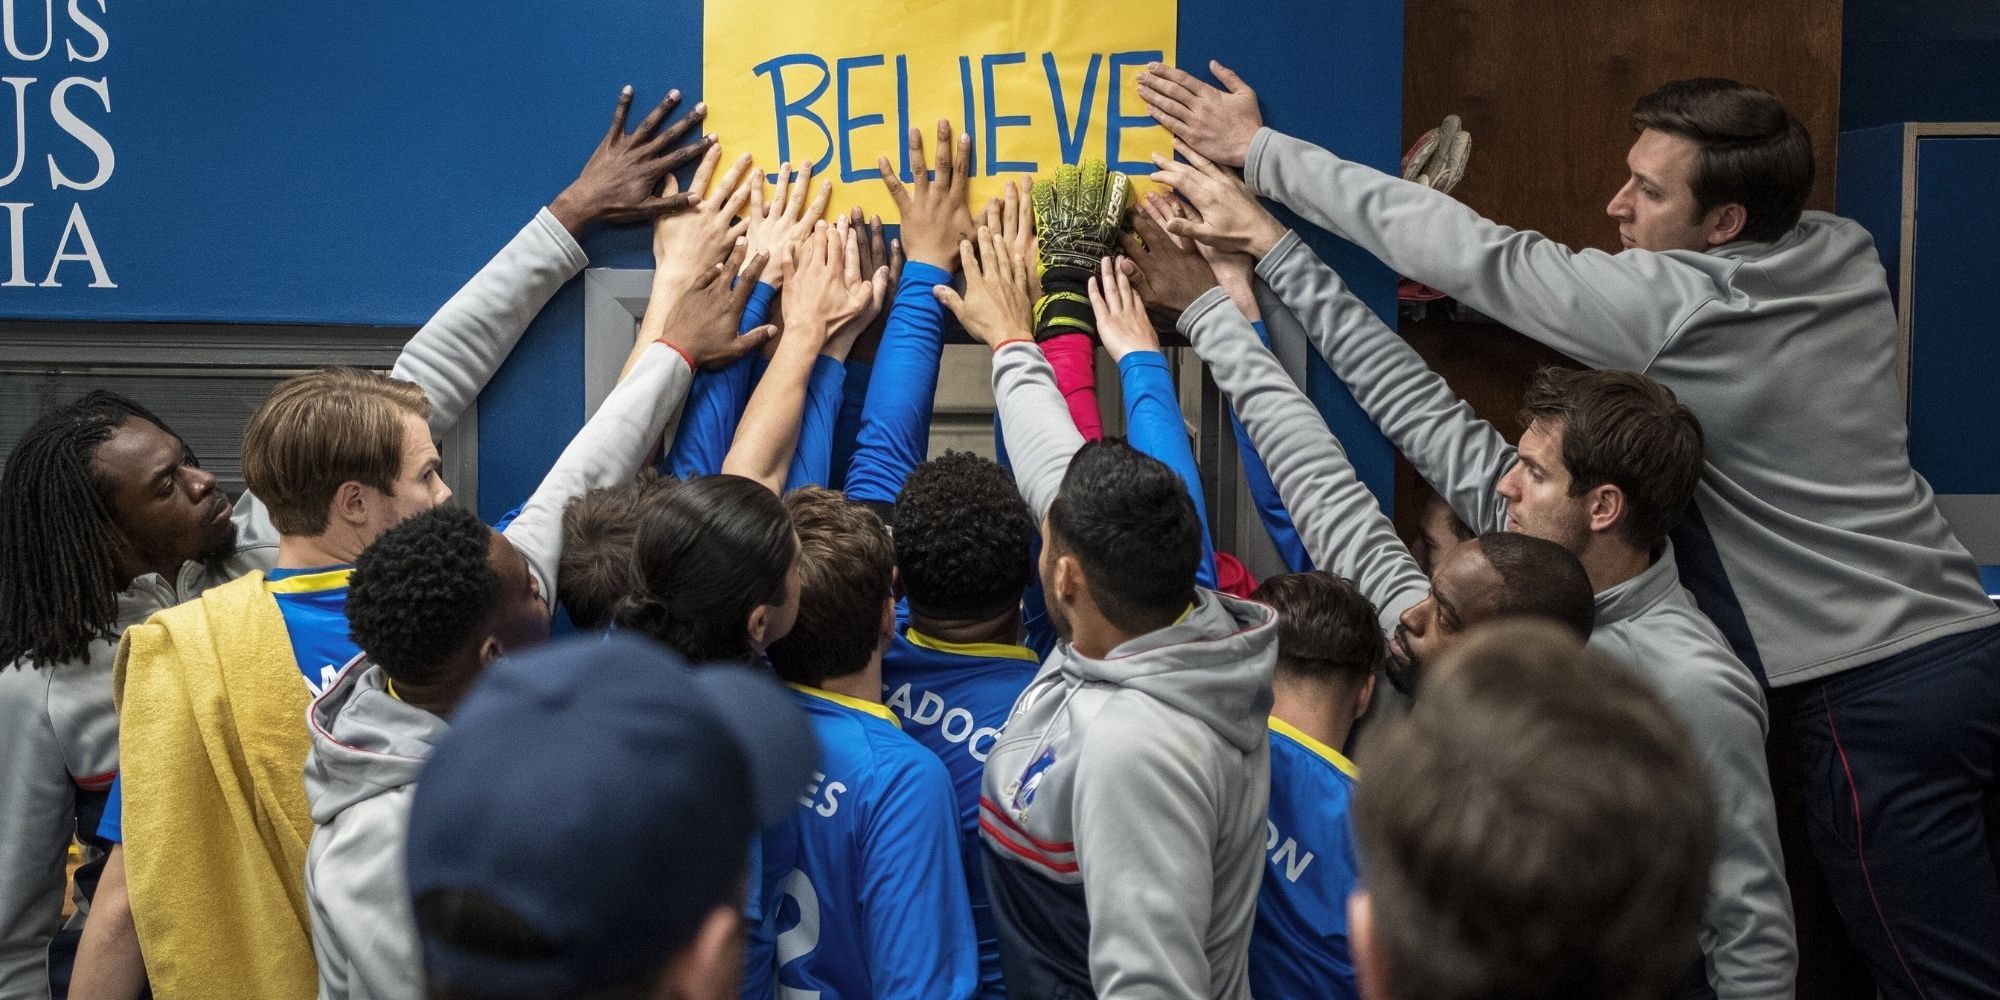 AFC Richmond touching "Believe" sign